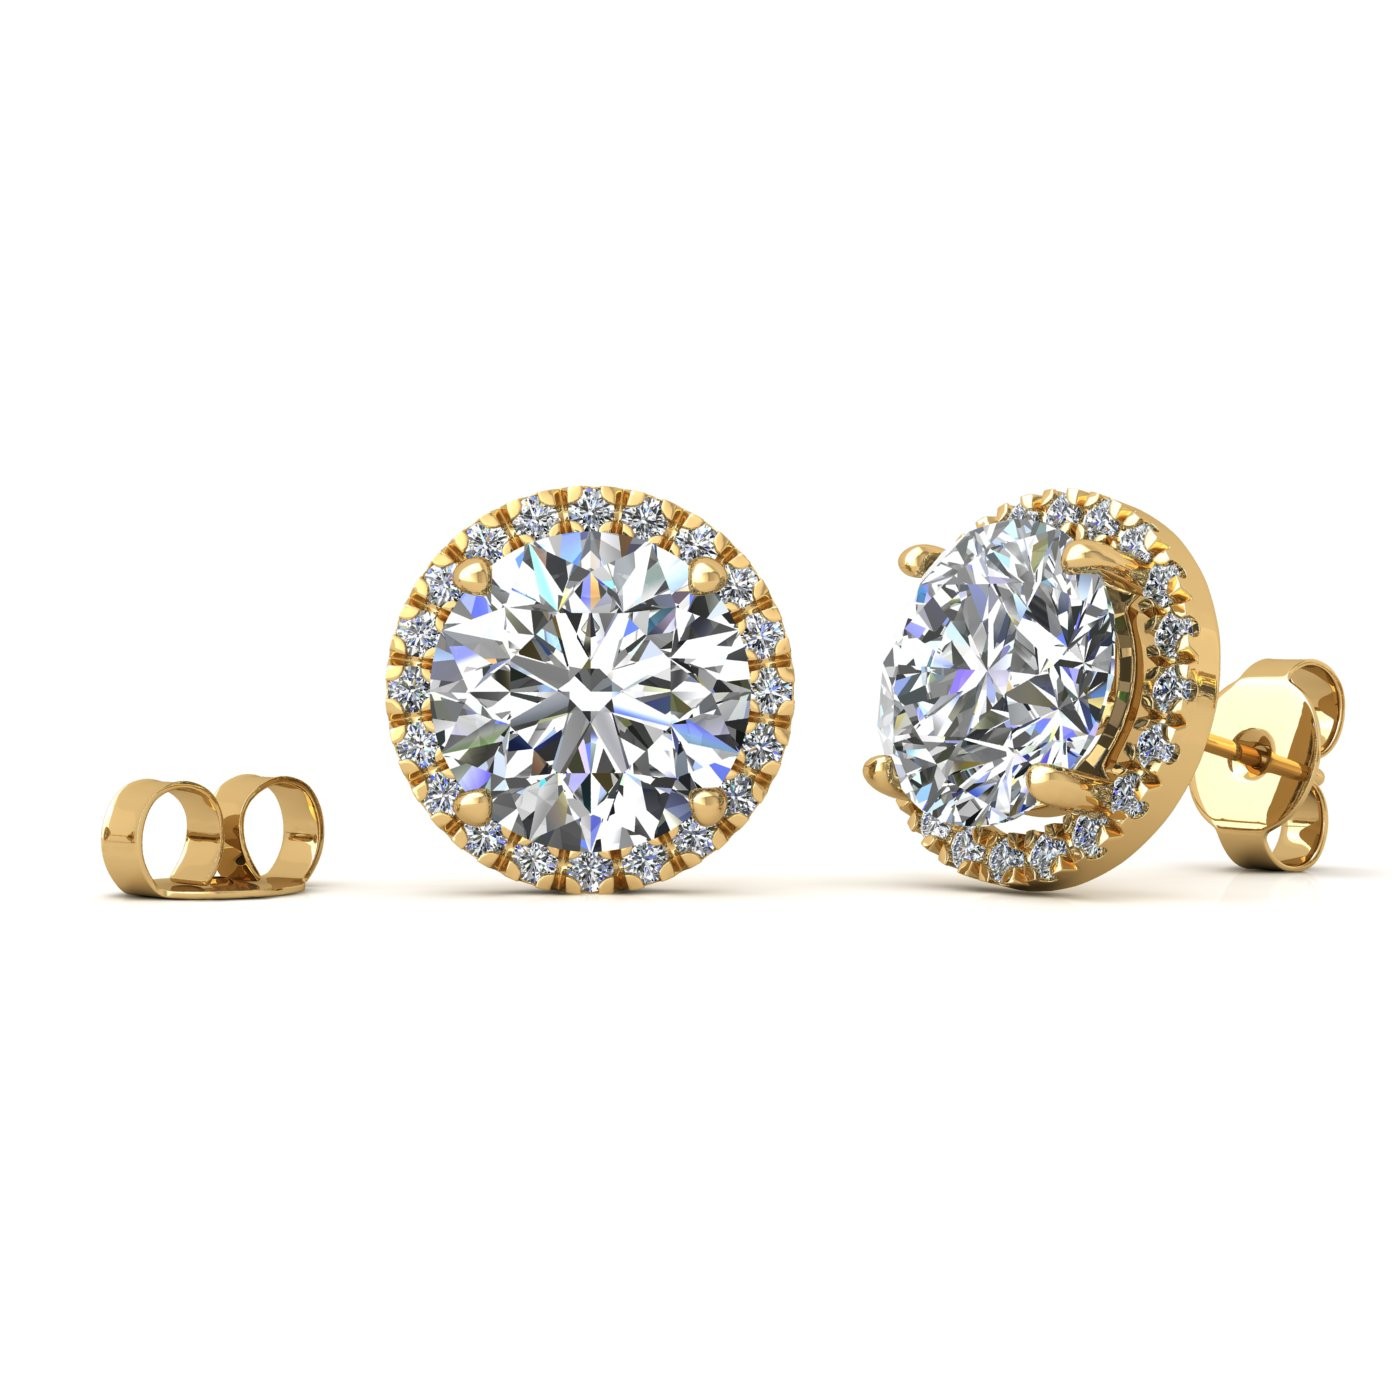 18k yellow gold  1,5 ct each (3,0 tcw) 4 prongs round shape diamond earrings with diamond pavÉ set halo